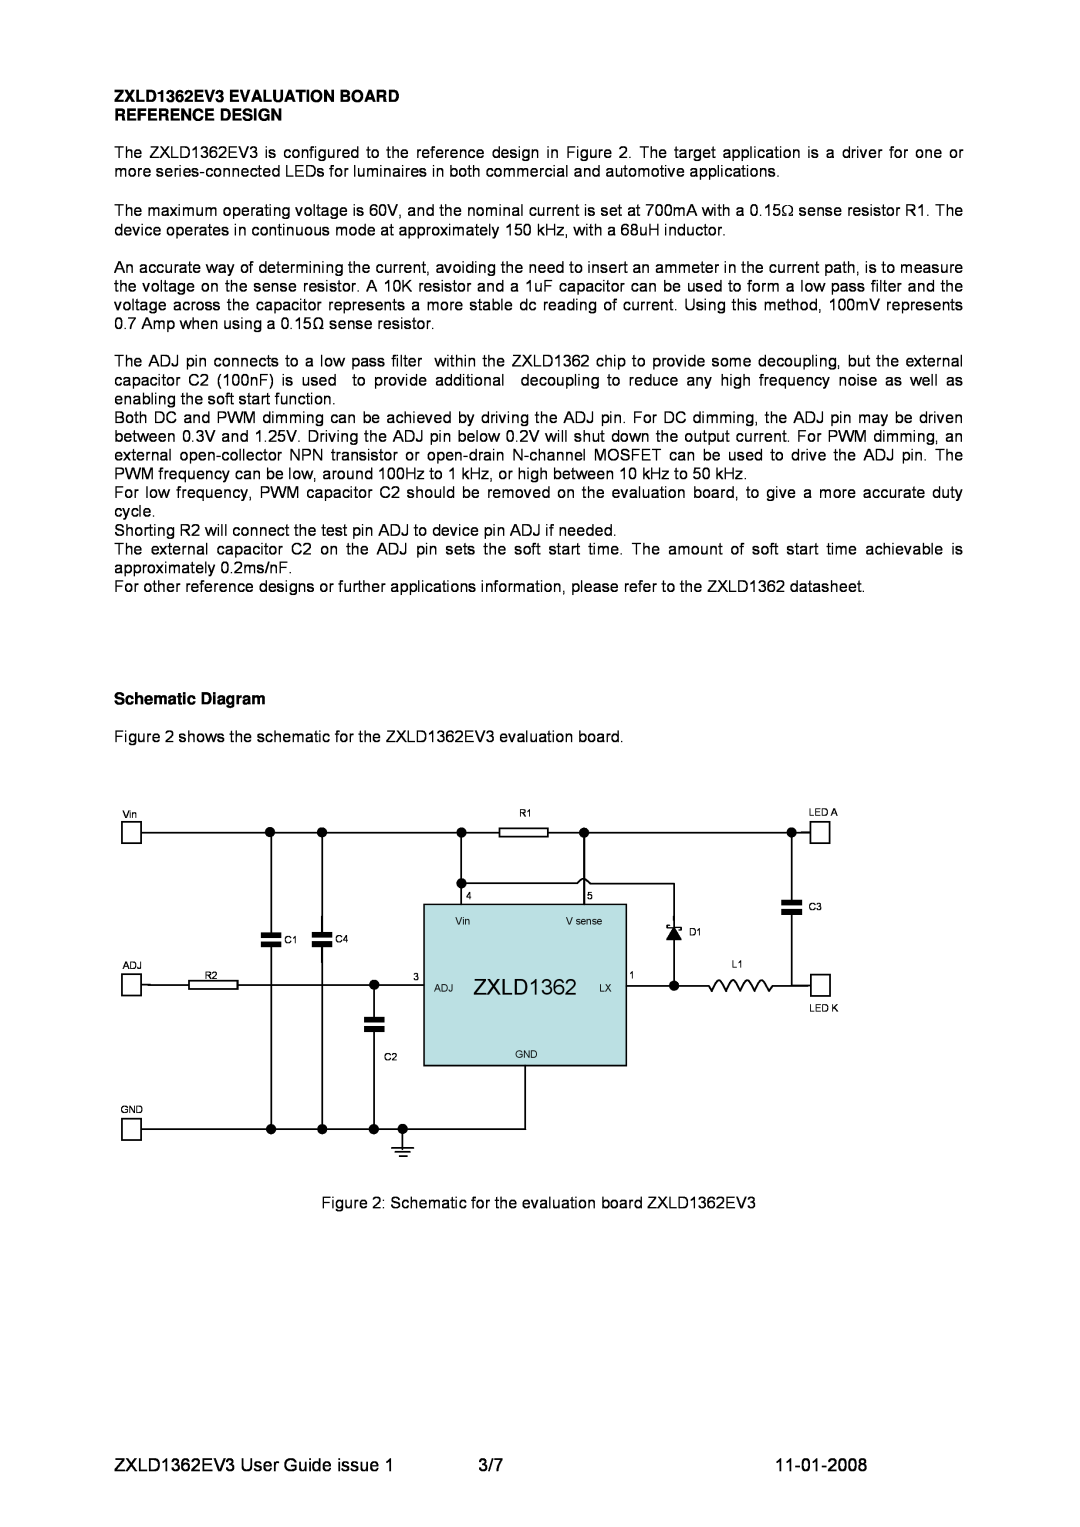 Zetex Semiconductors PLC manual ADJ ZXLD1362 LX, ZXLD1362EV3 User Guide issue, 11-01-2008, Schematic Diagram 